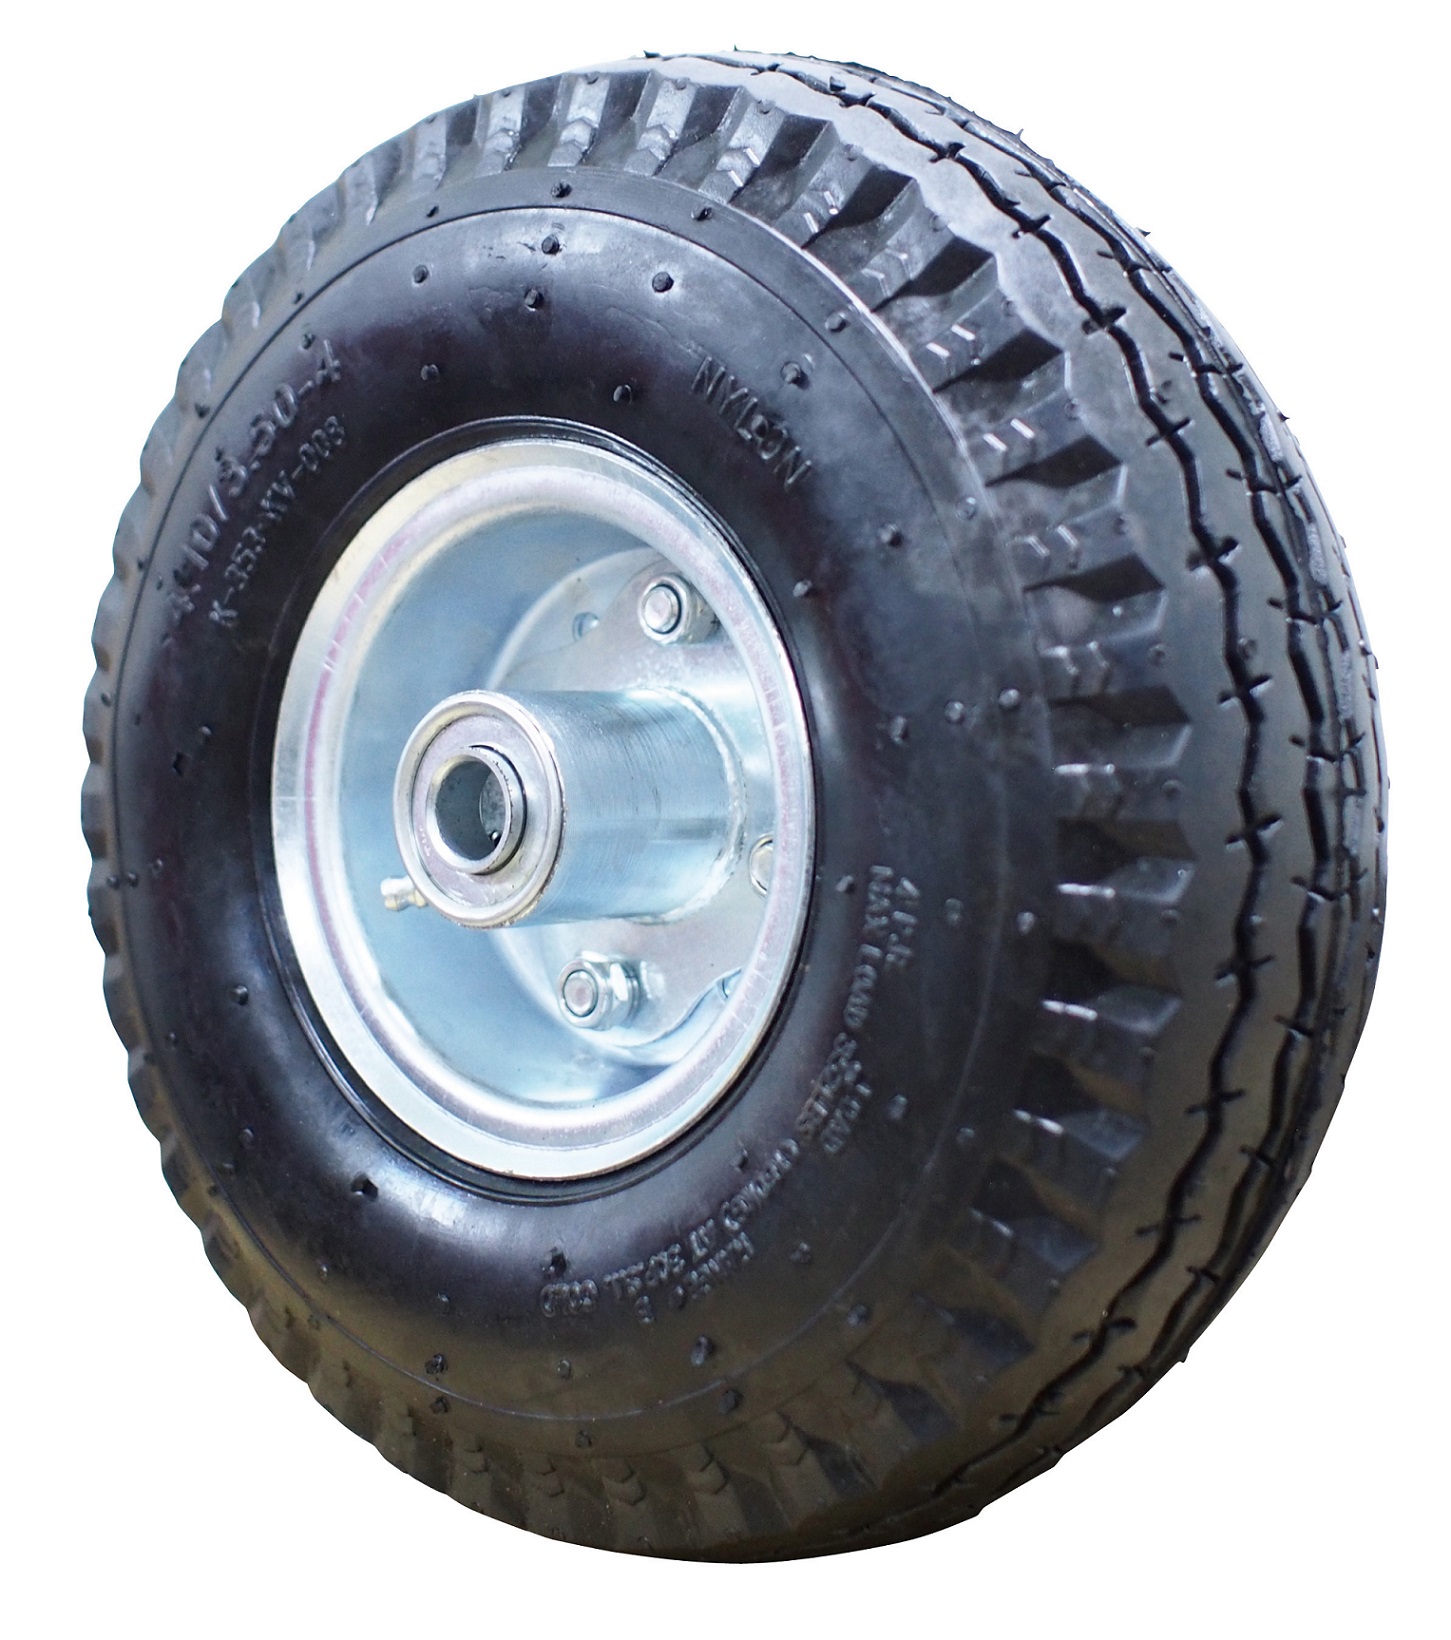 10 inch Pneumatic Air tire on steel rim